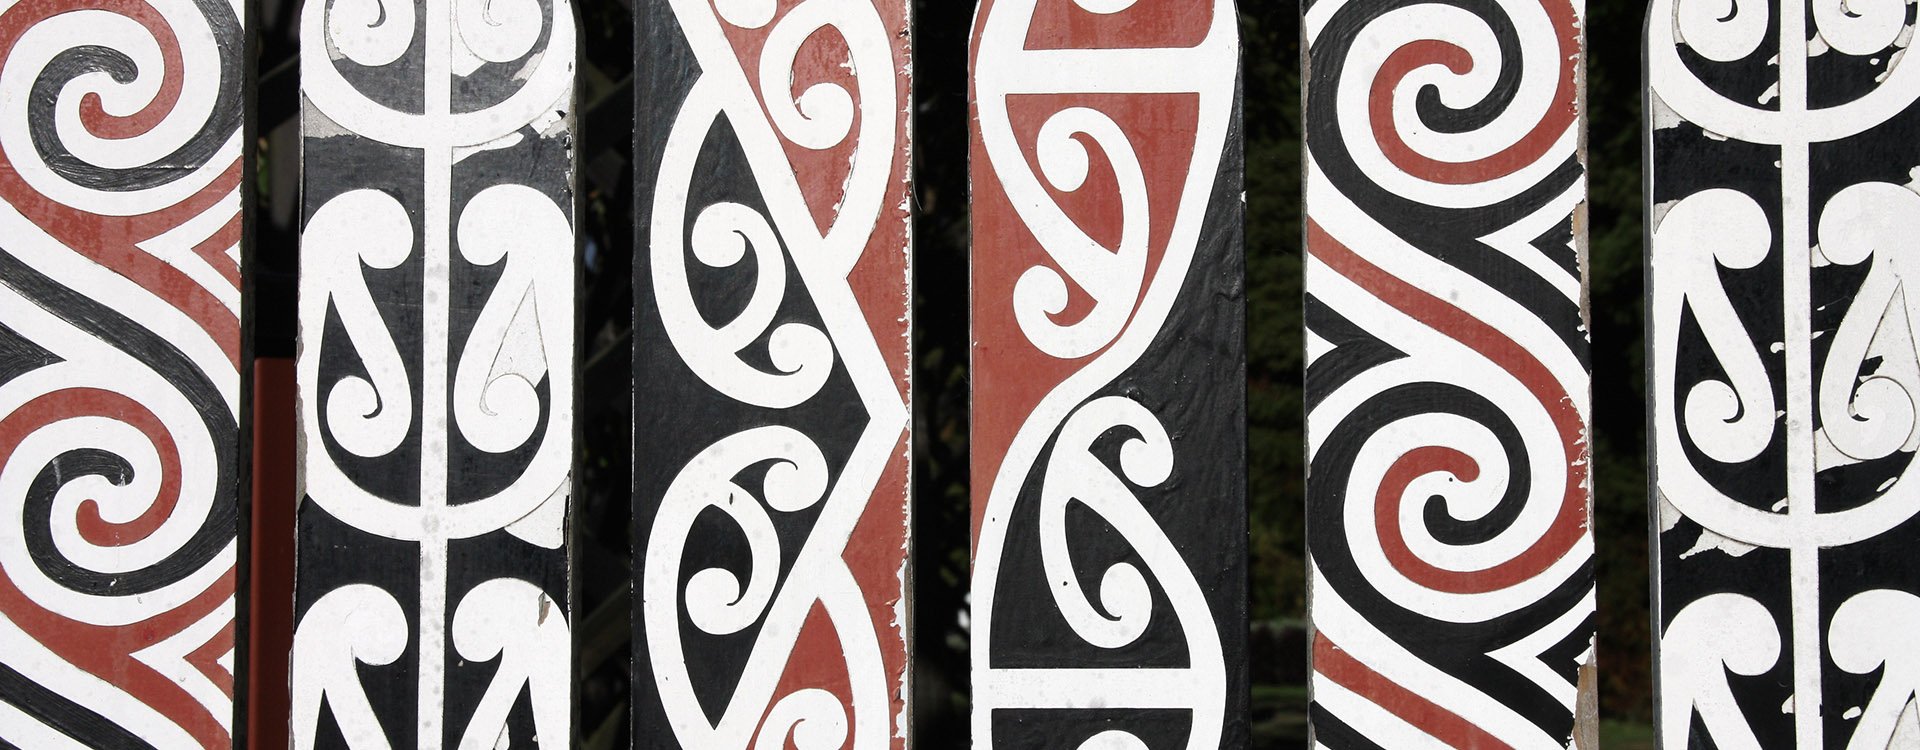 Maori painted decorations in Rotorua, New Zealand